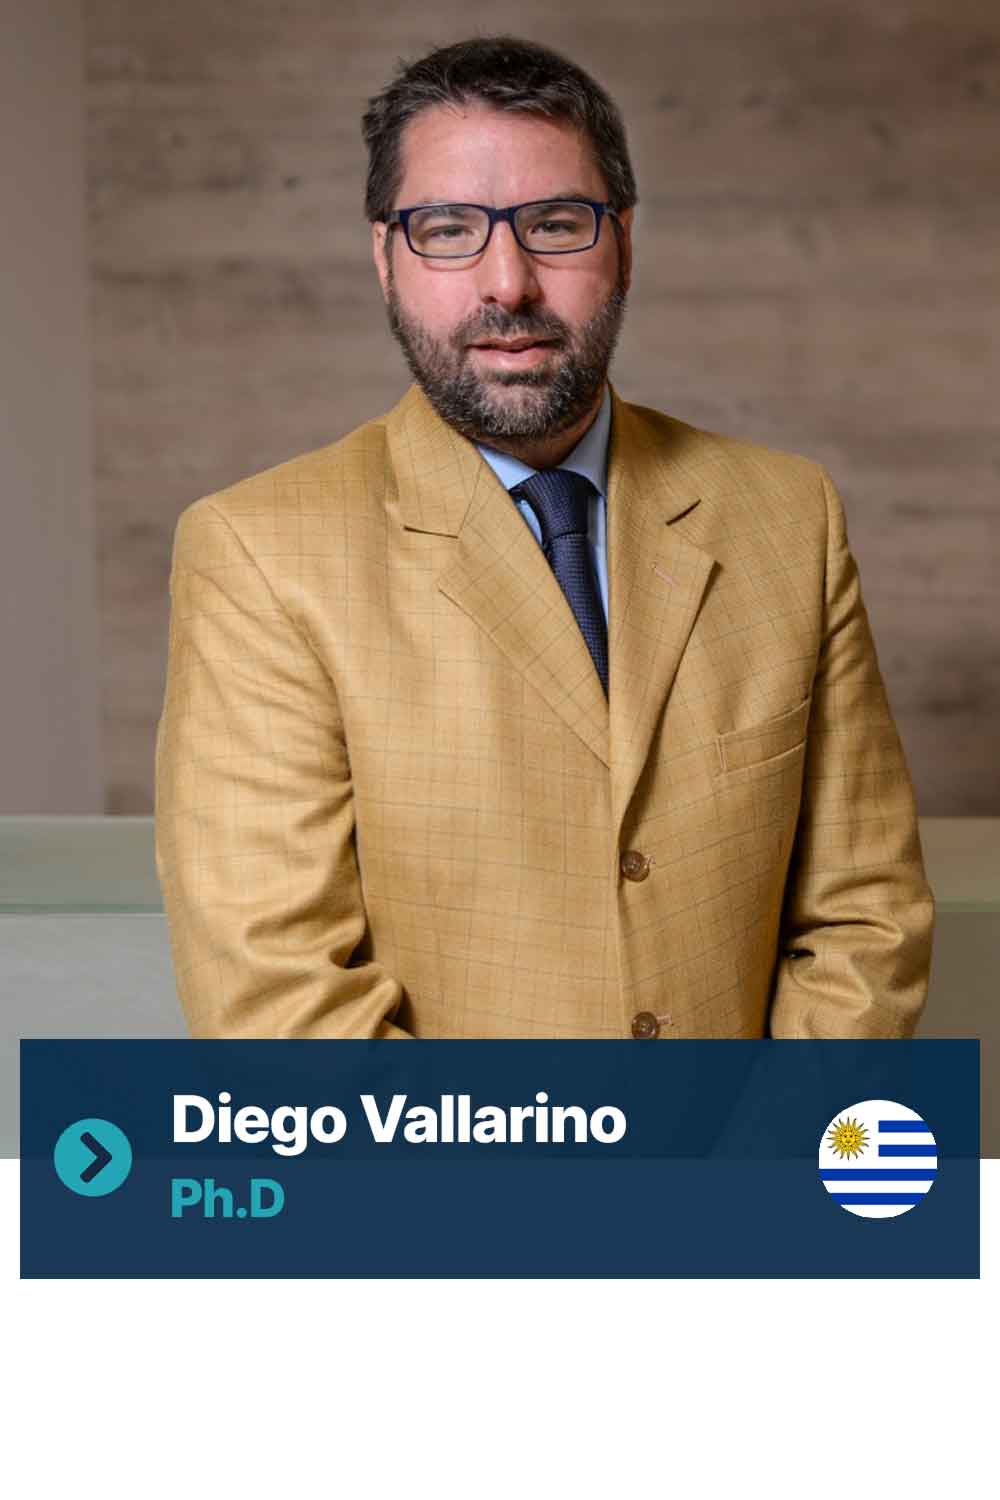 Diego Vallarino